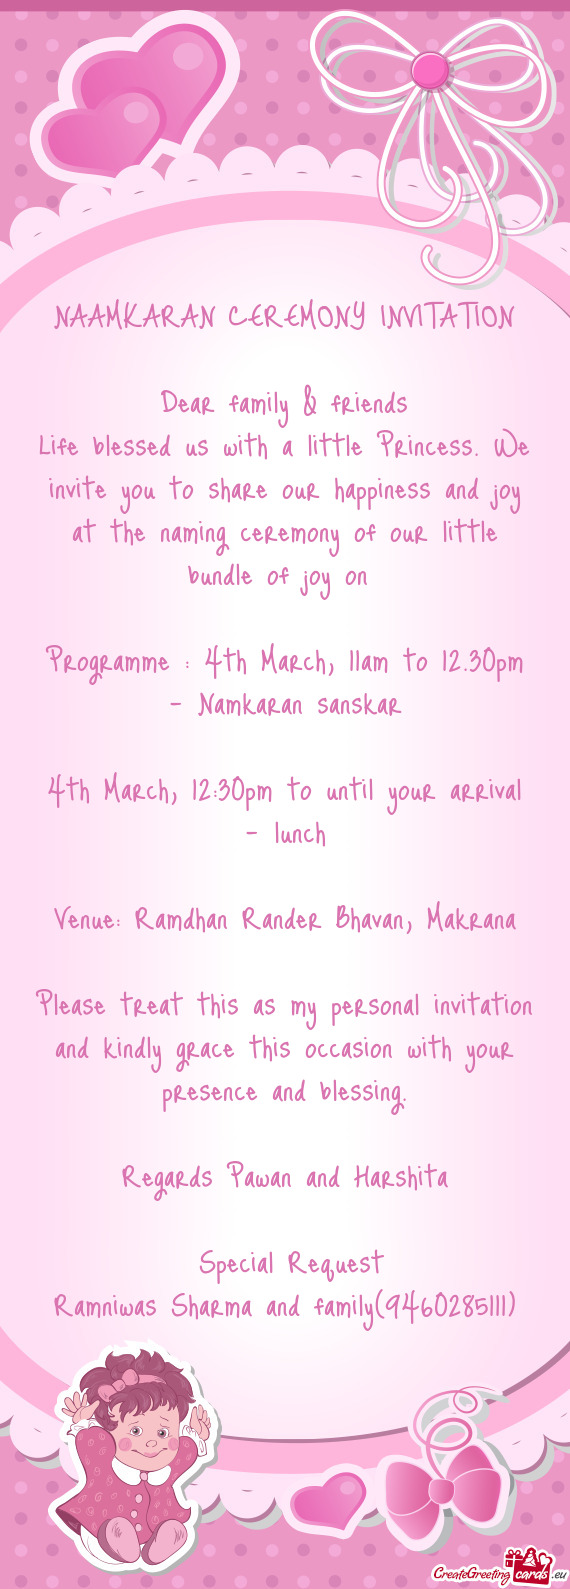 Programme : 4th March, 11am to 12.30pm - Namkaran sanskar